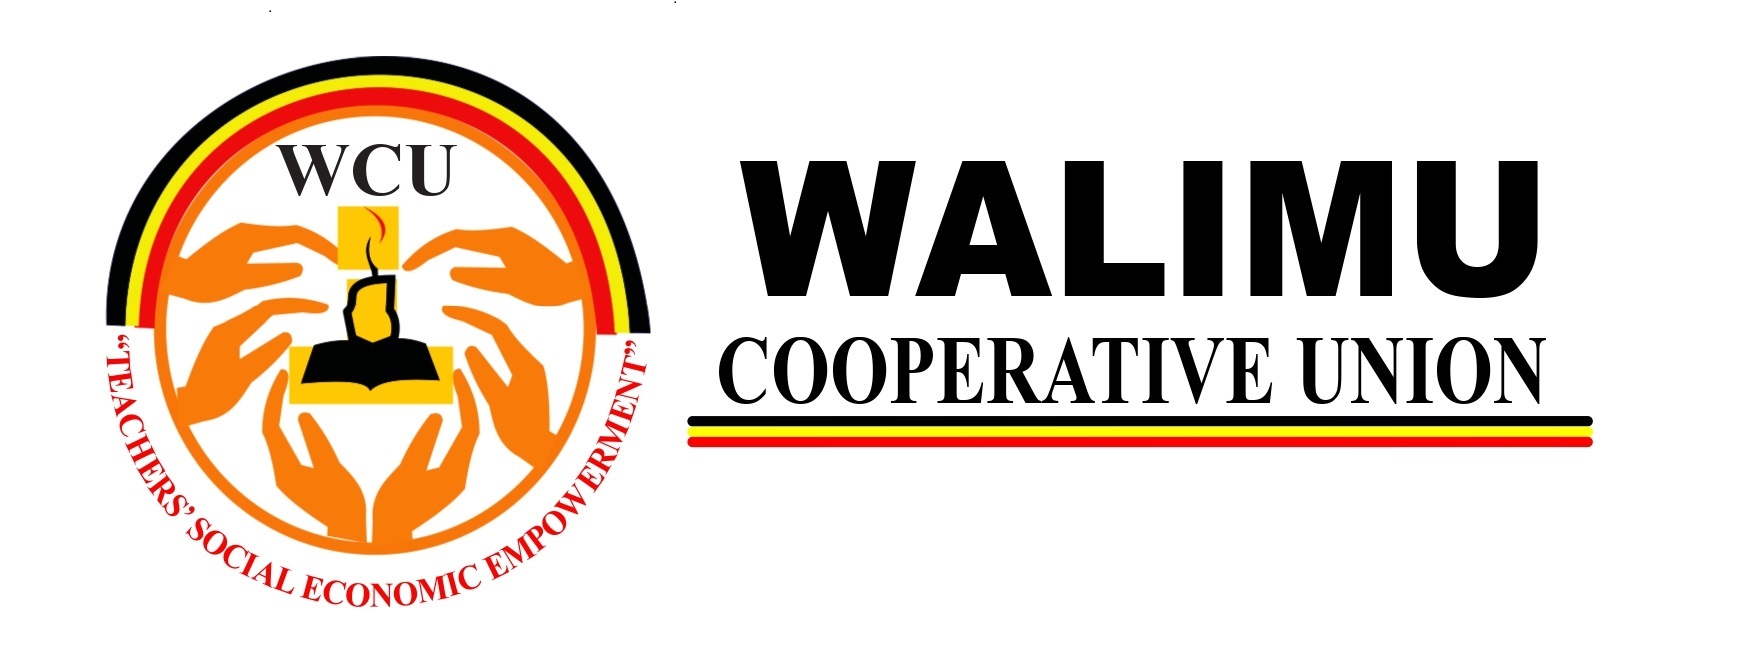 WALIMU COOPERATIVE UNION